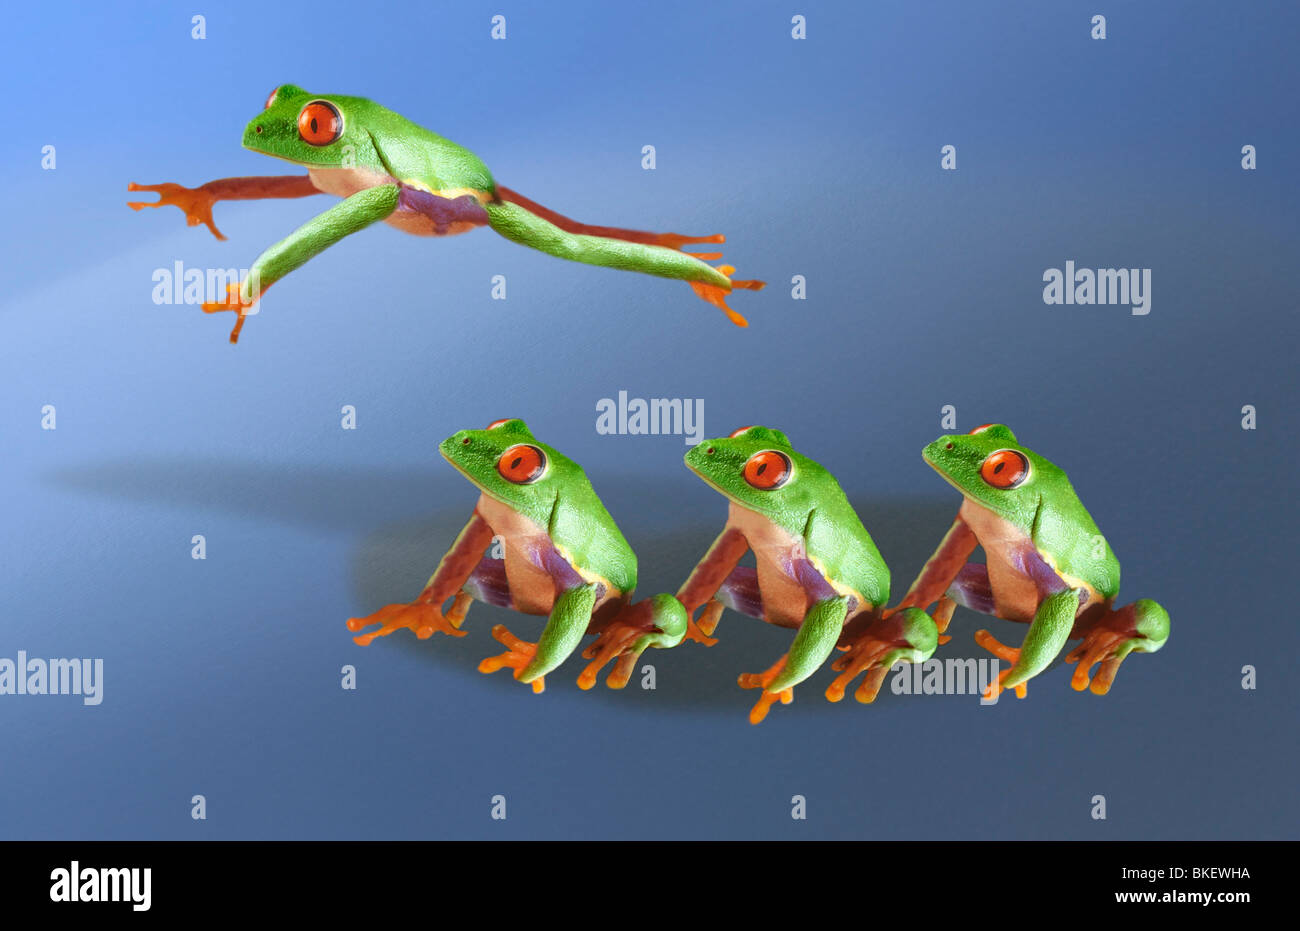 Frog playing leapfrog Stock Photo